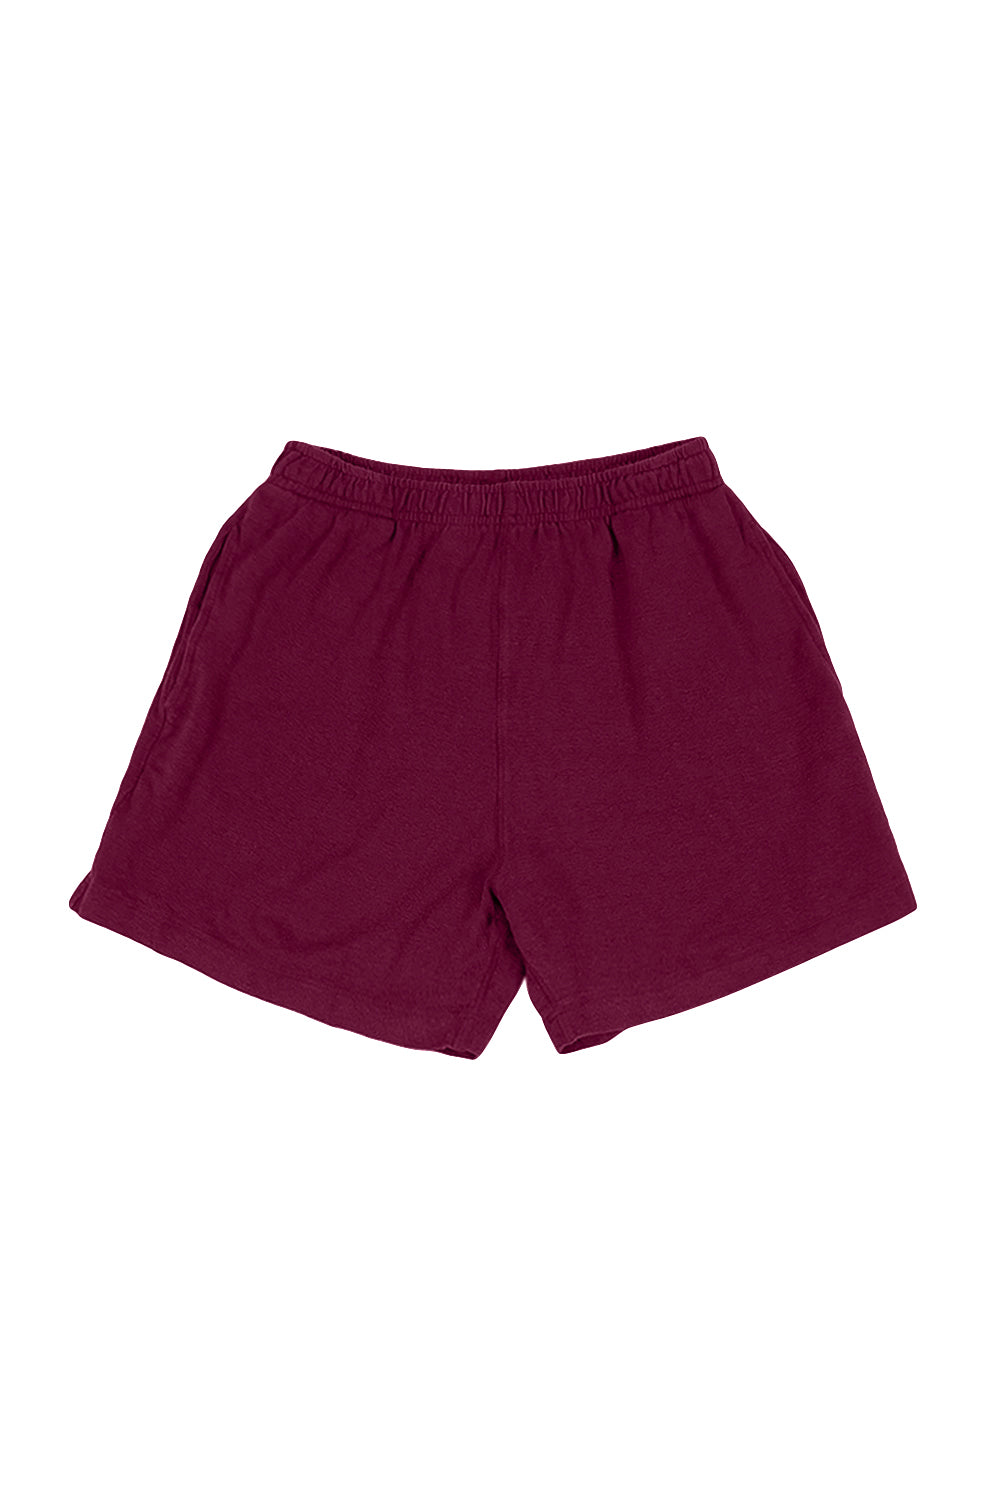 Kona 100% Hemp Short | Jungmaven Hemp Clothing & Accessories / Color: Burgundy